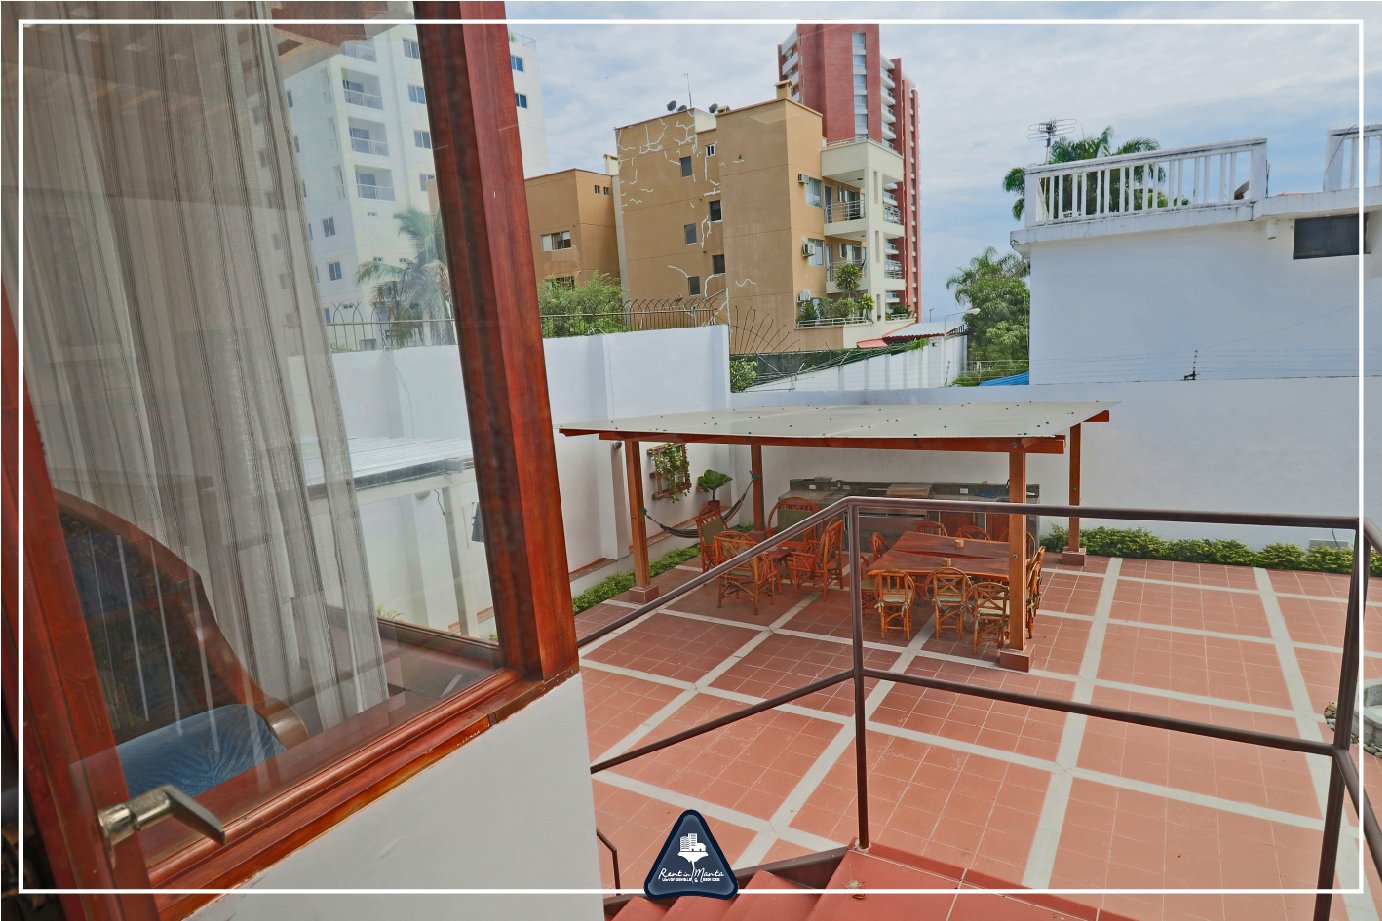 Rent in. Manta - property - Casa en Renta Urb Pedro Balda-50.jpg